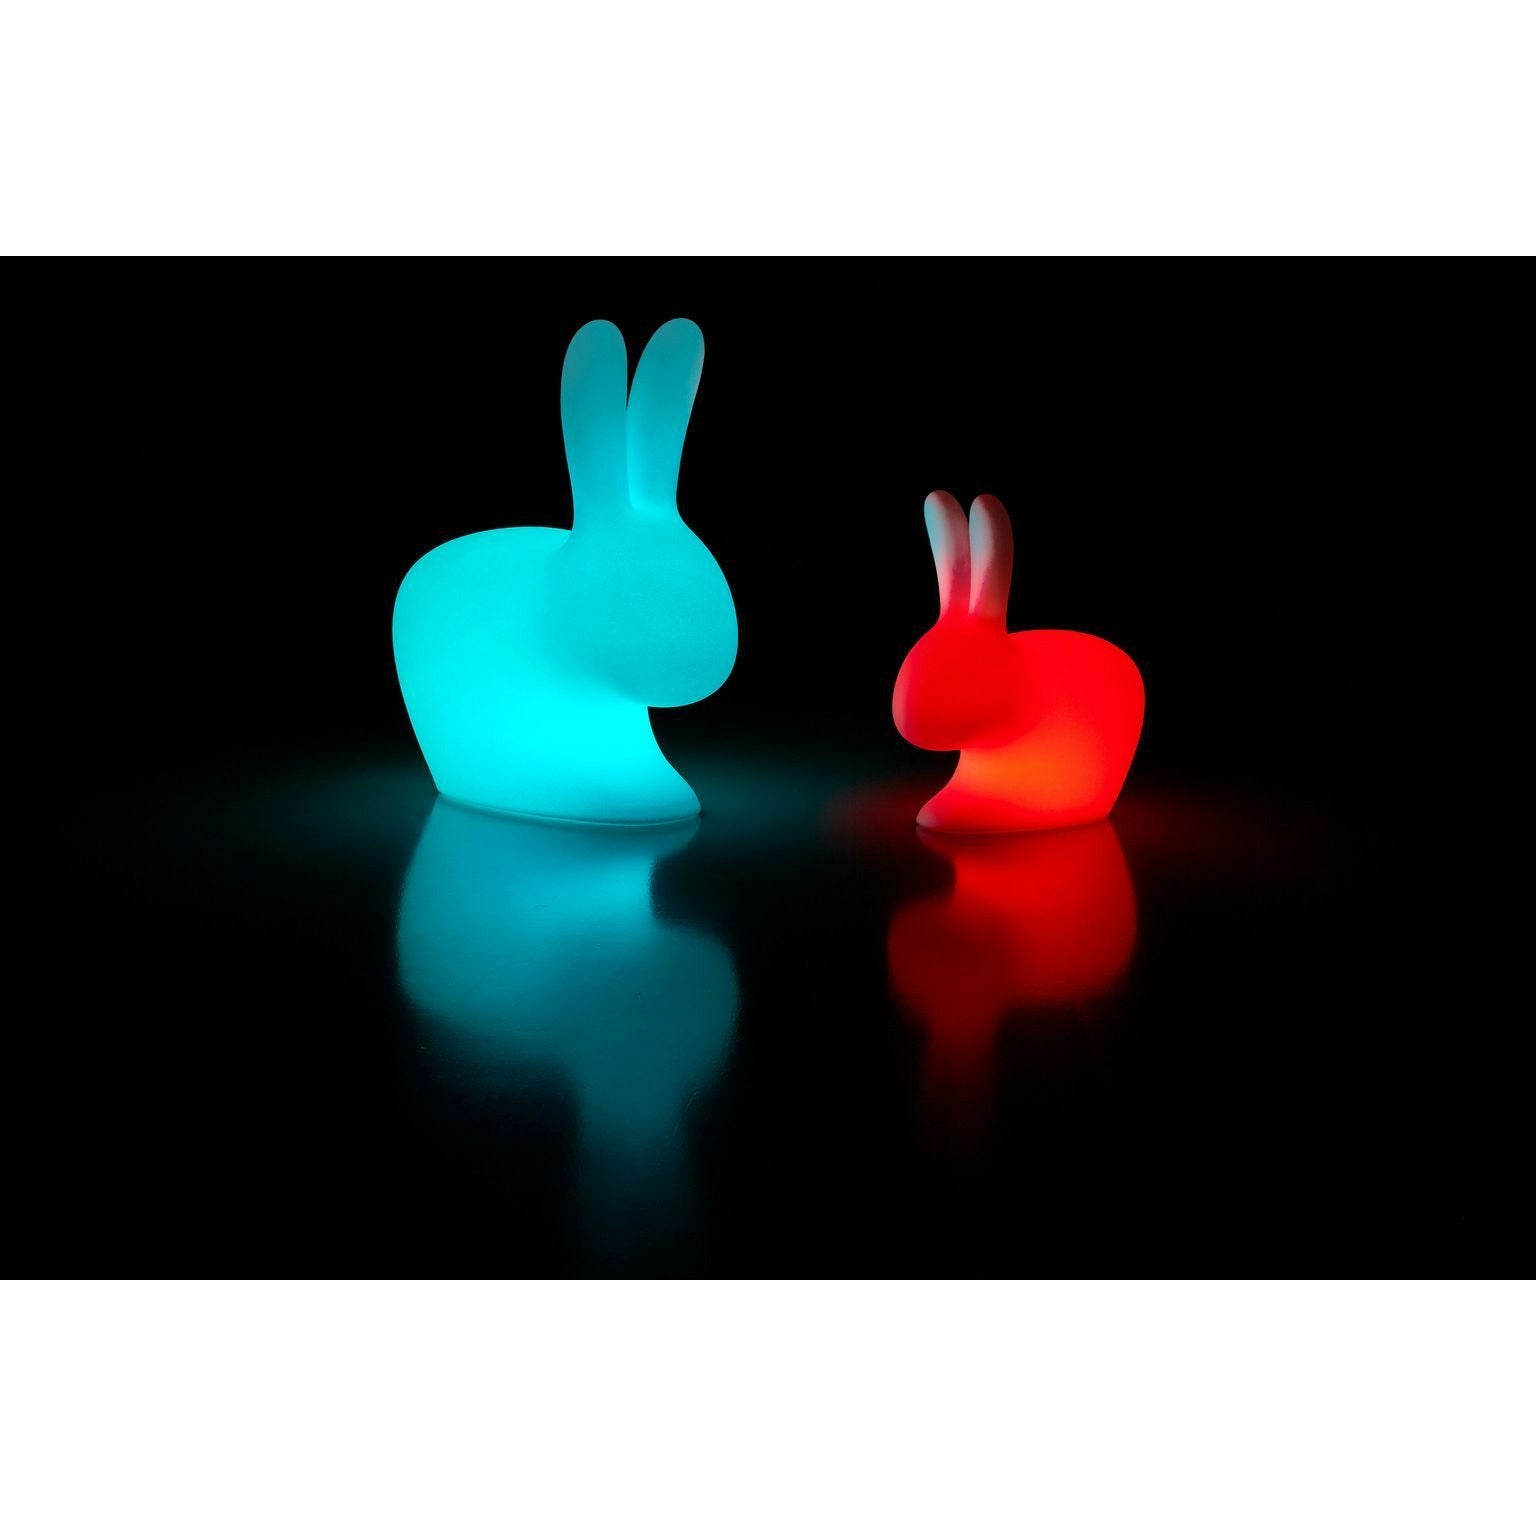 Qeeboo Rabbit LED -ljusstartbar, s